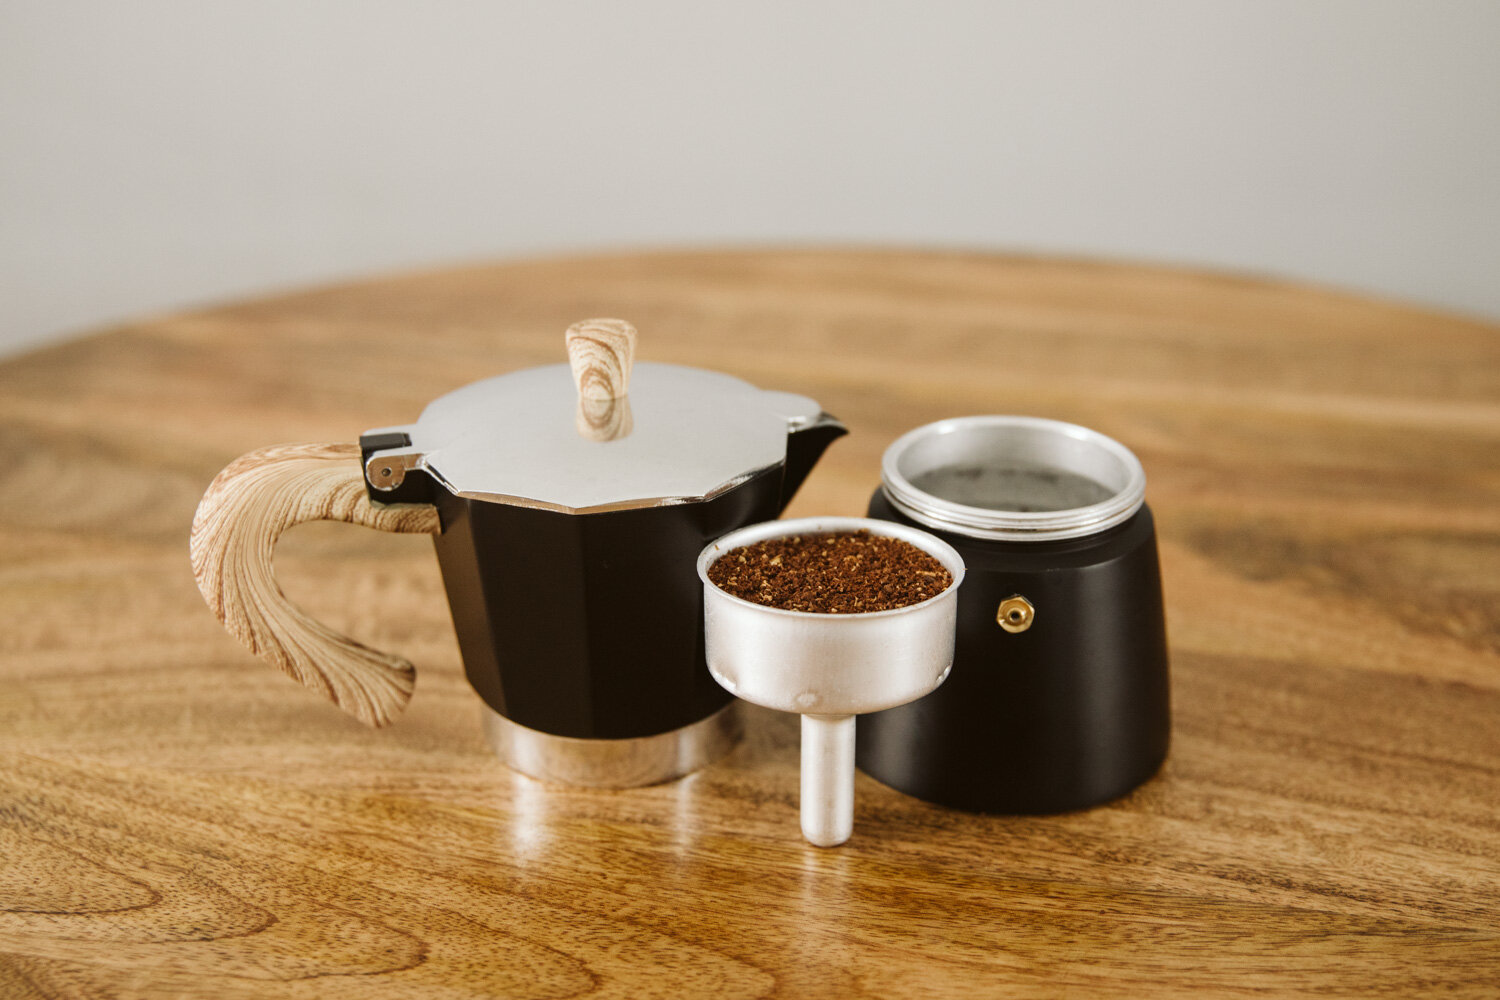 How to make coffee with the Moka Pot